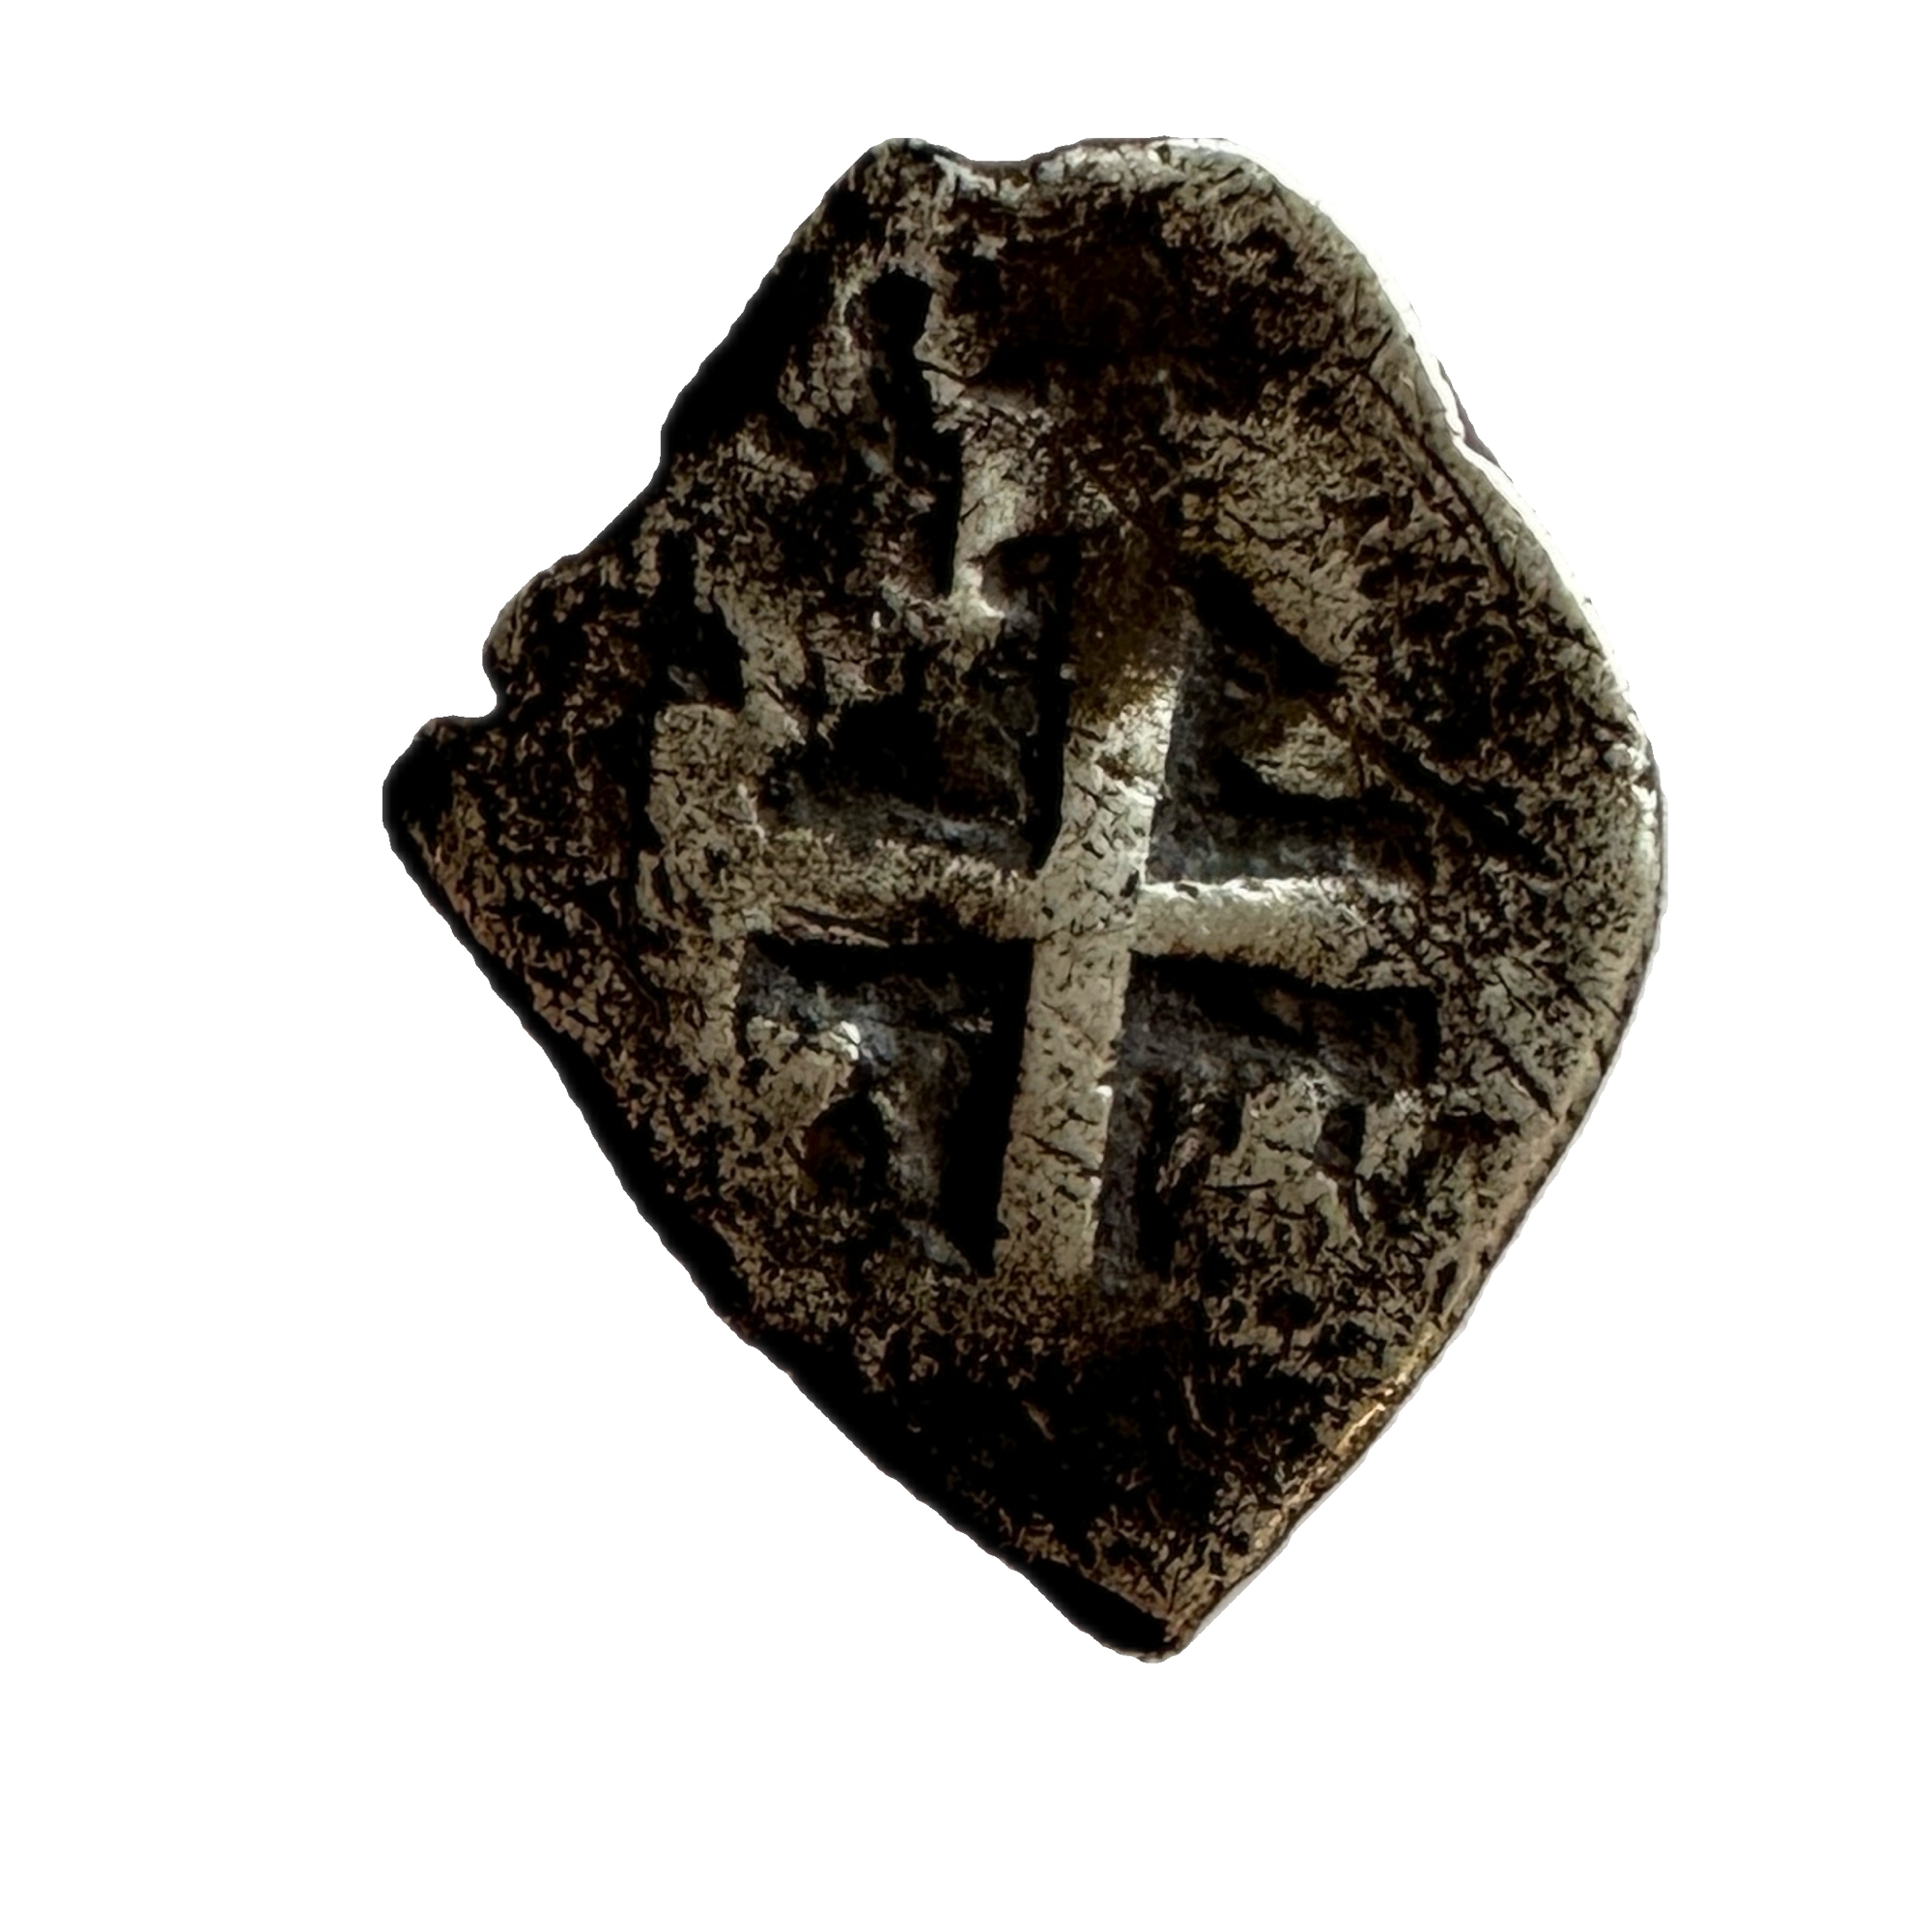 Shipwreck Silver treasure, 1/2 Reale Cob, 1.37g Prehistoric Online